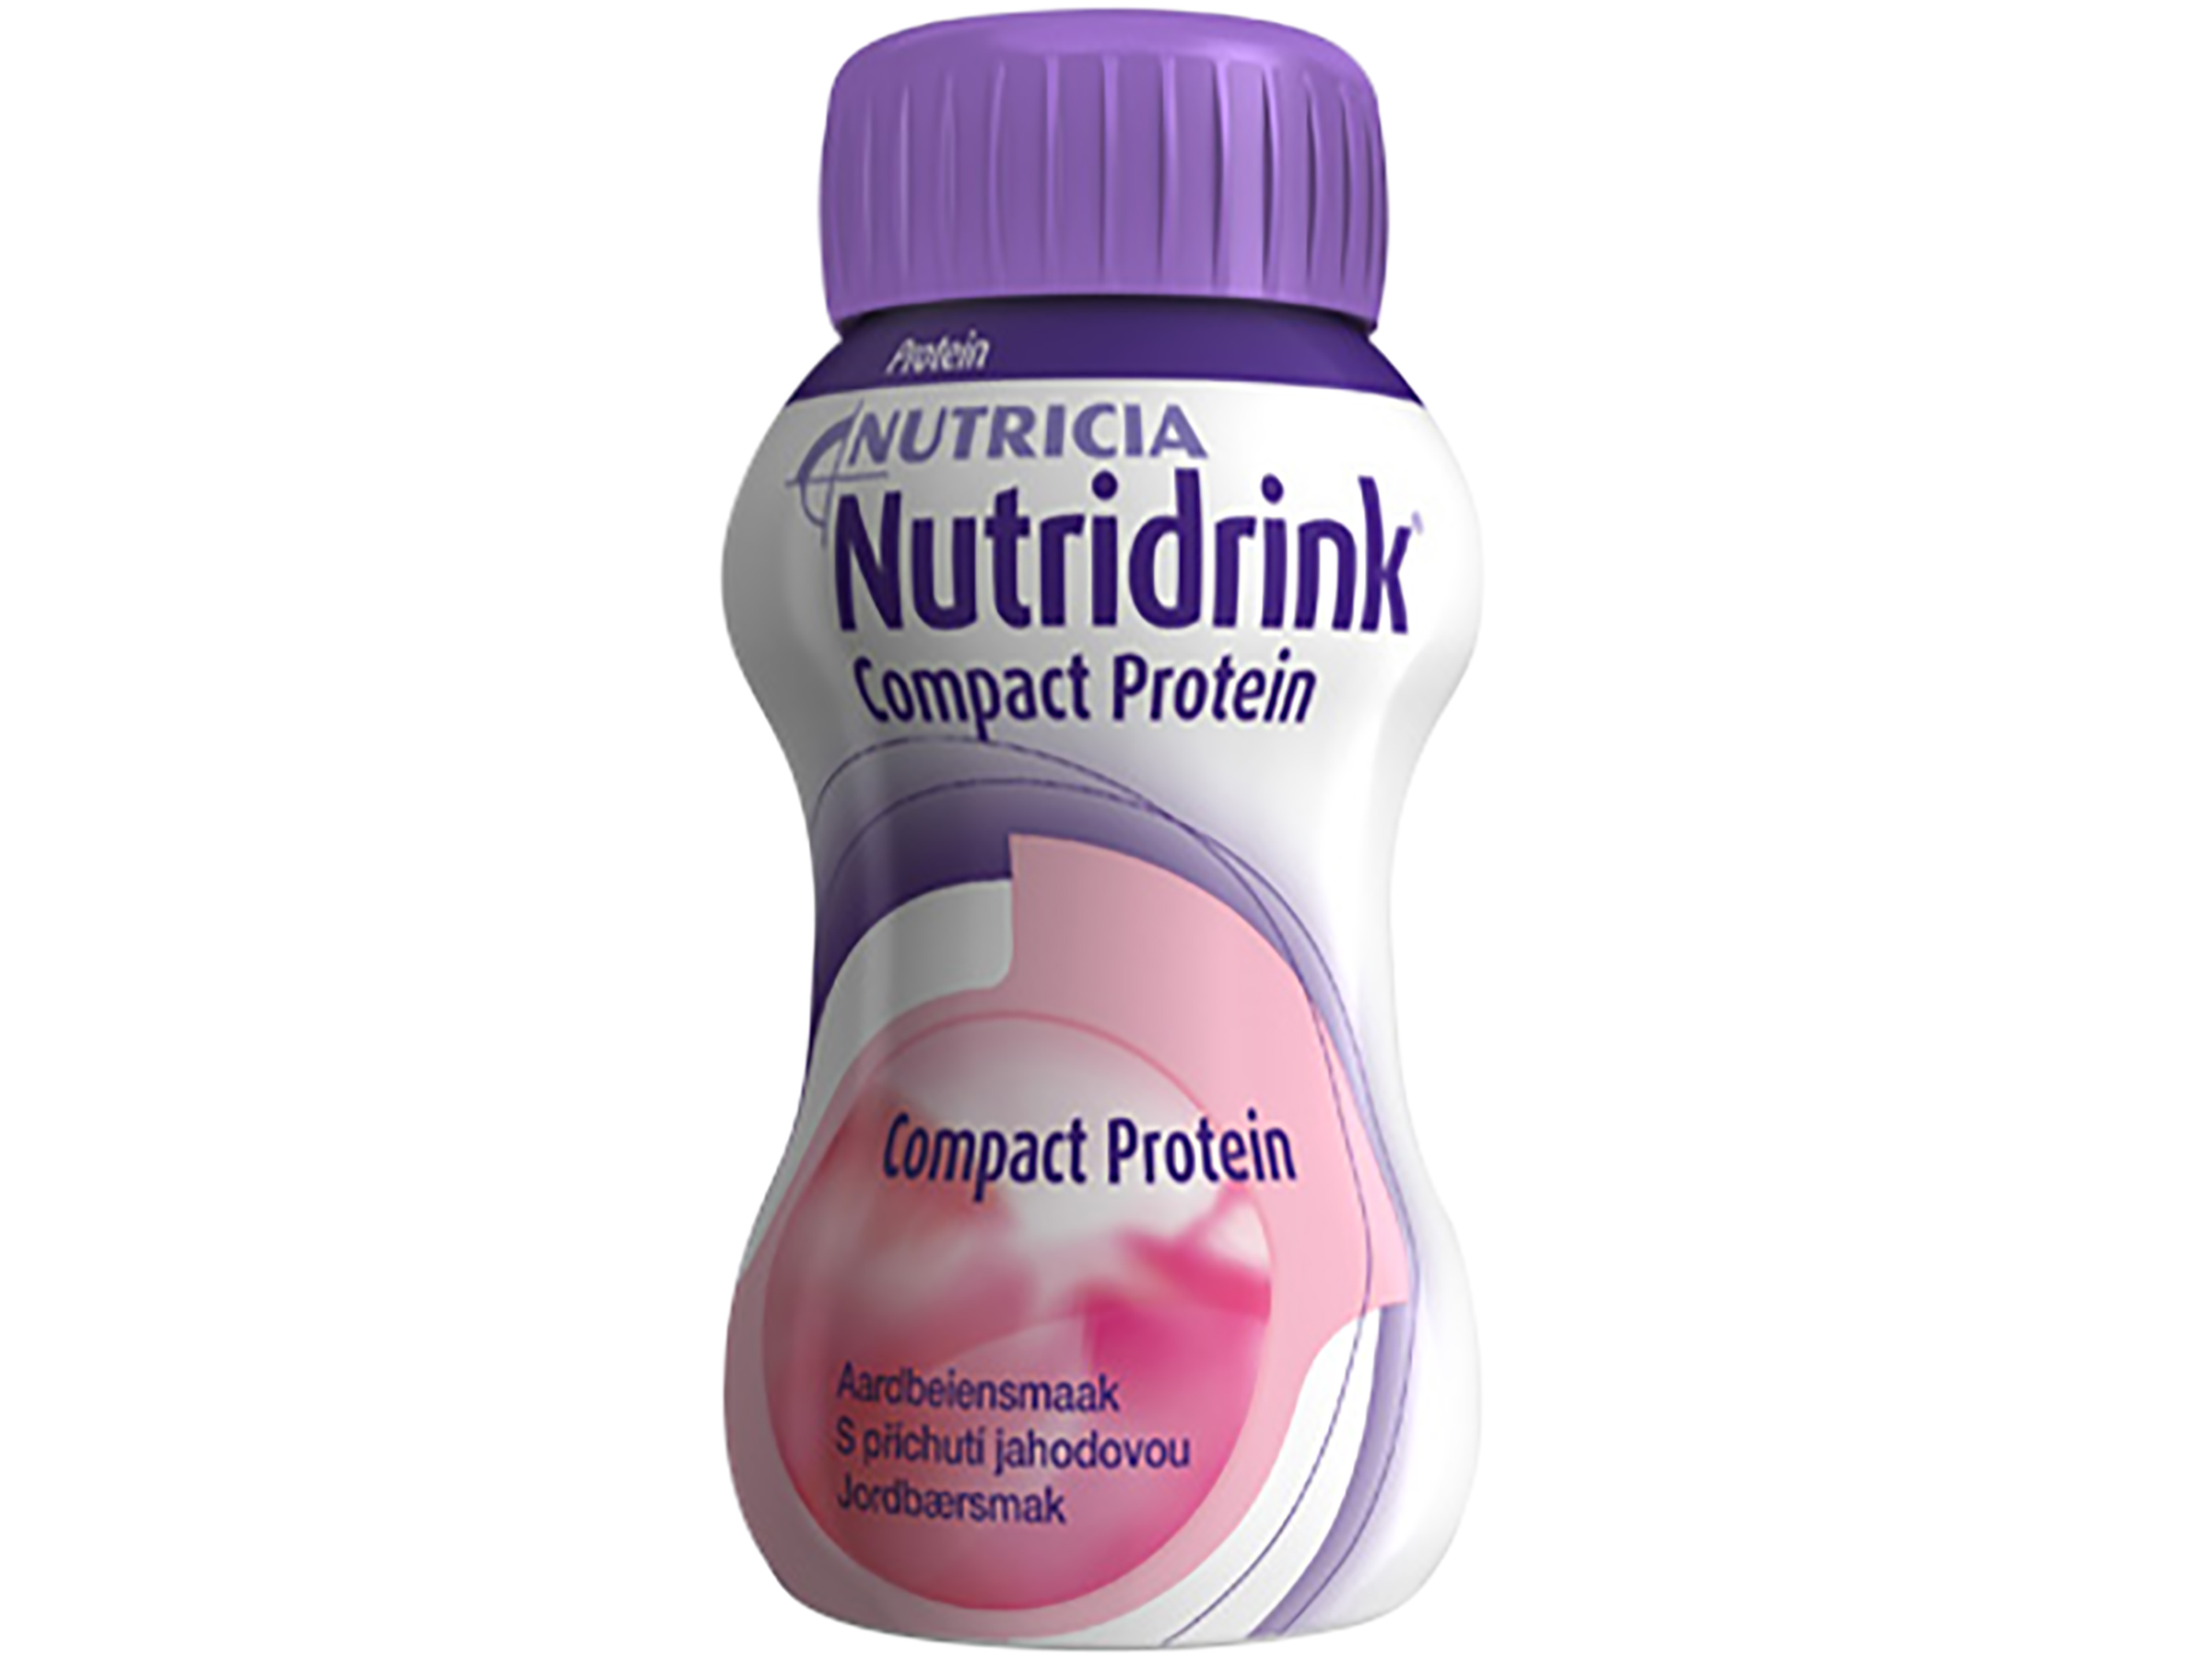 Nutridrink Compact proteinrik næringsdrikk, Jordbær, 4 x 125 ml